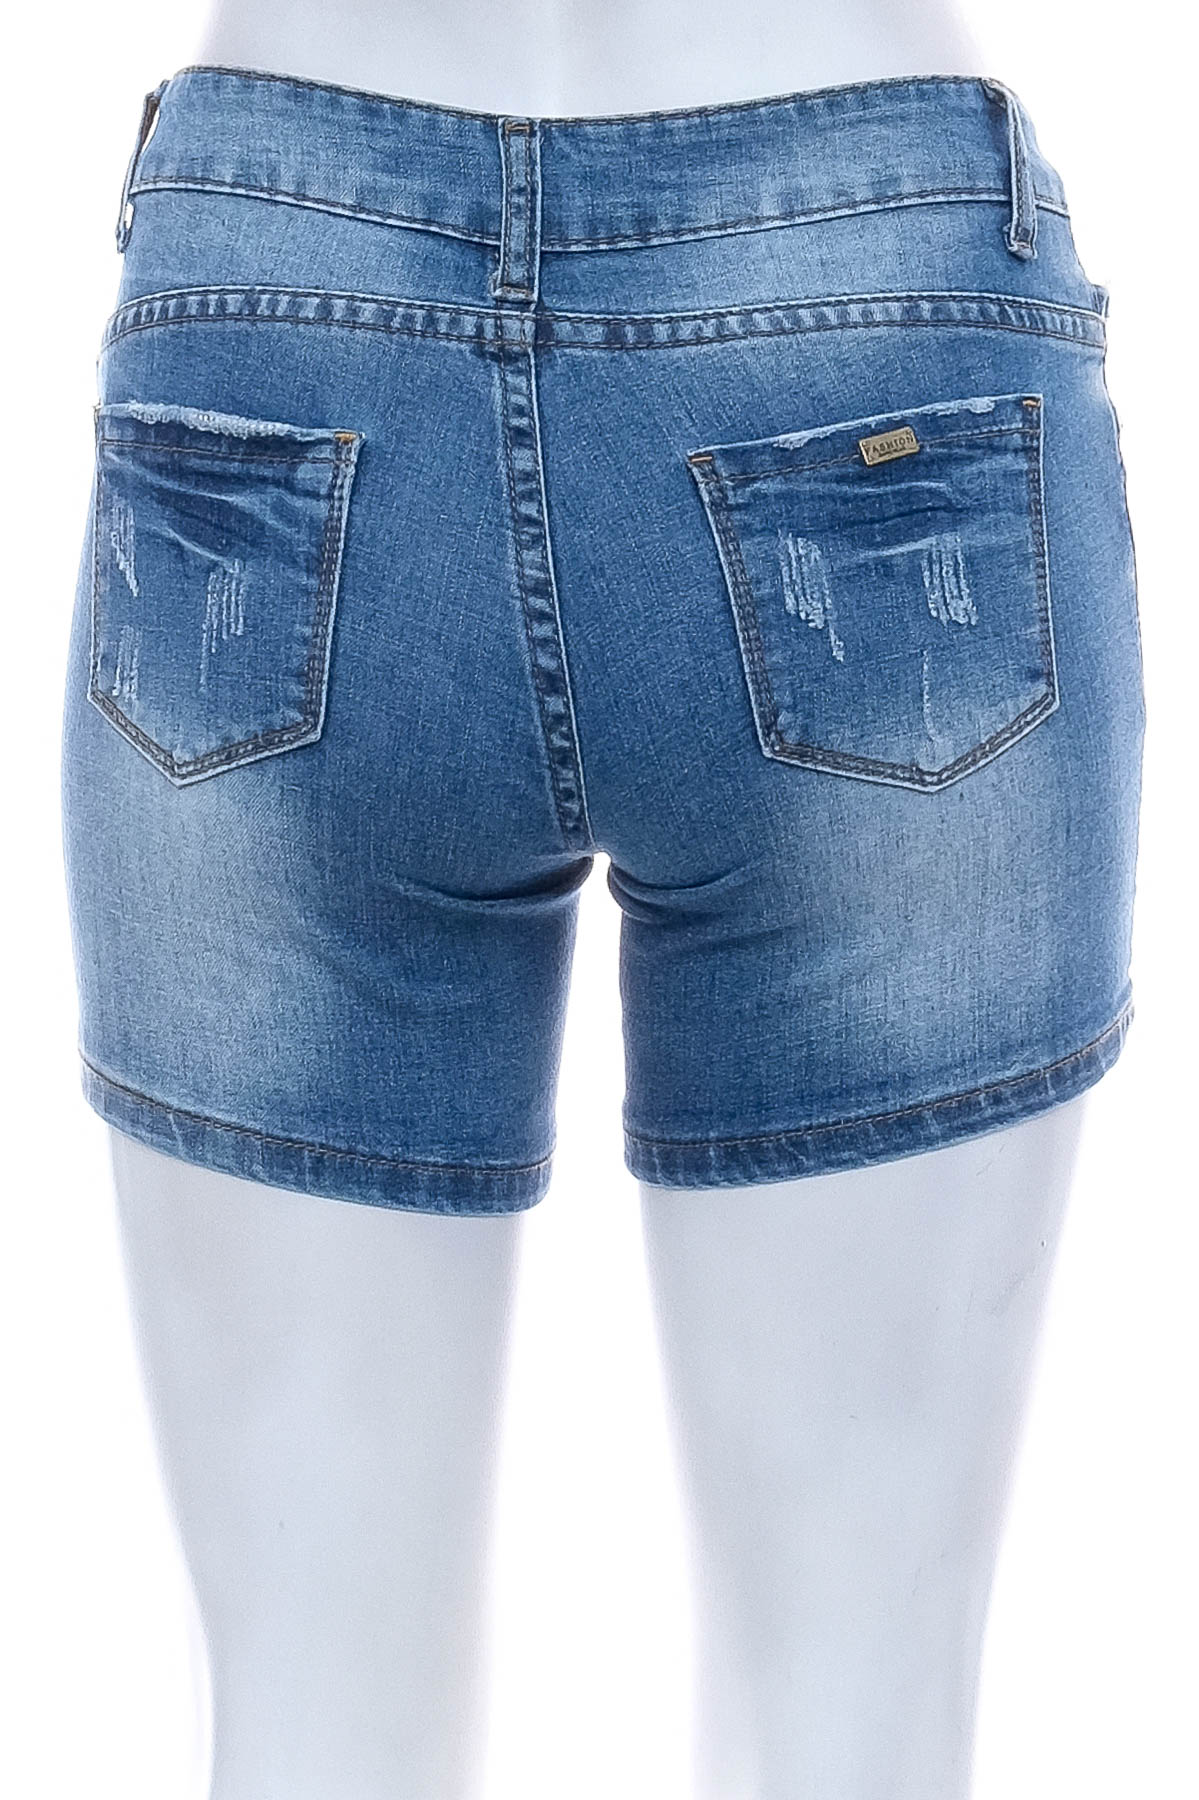 Female shorts - LJY - 1